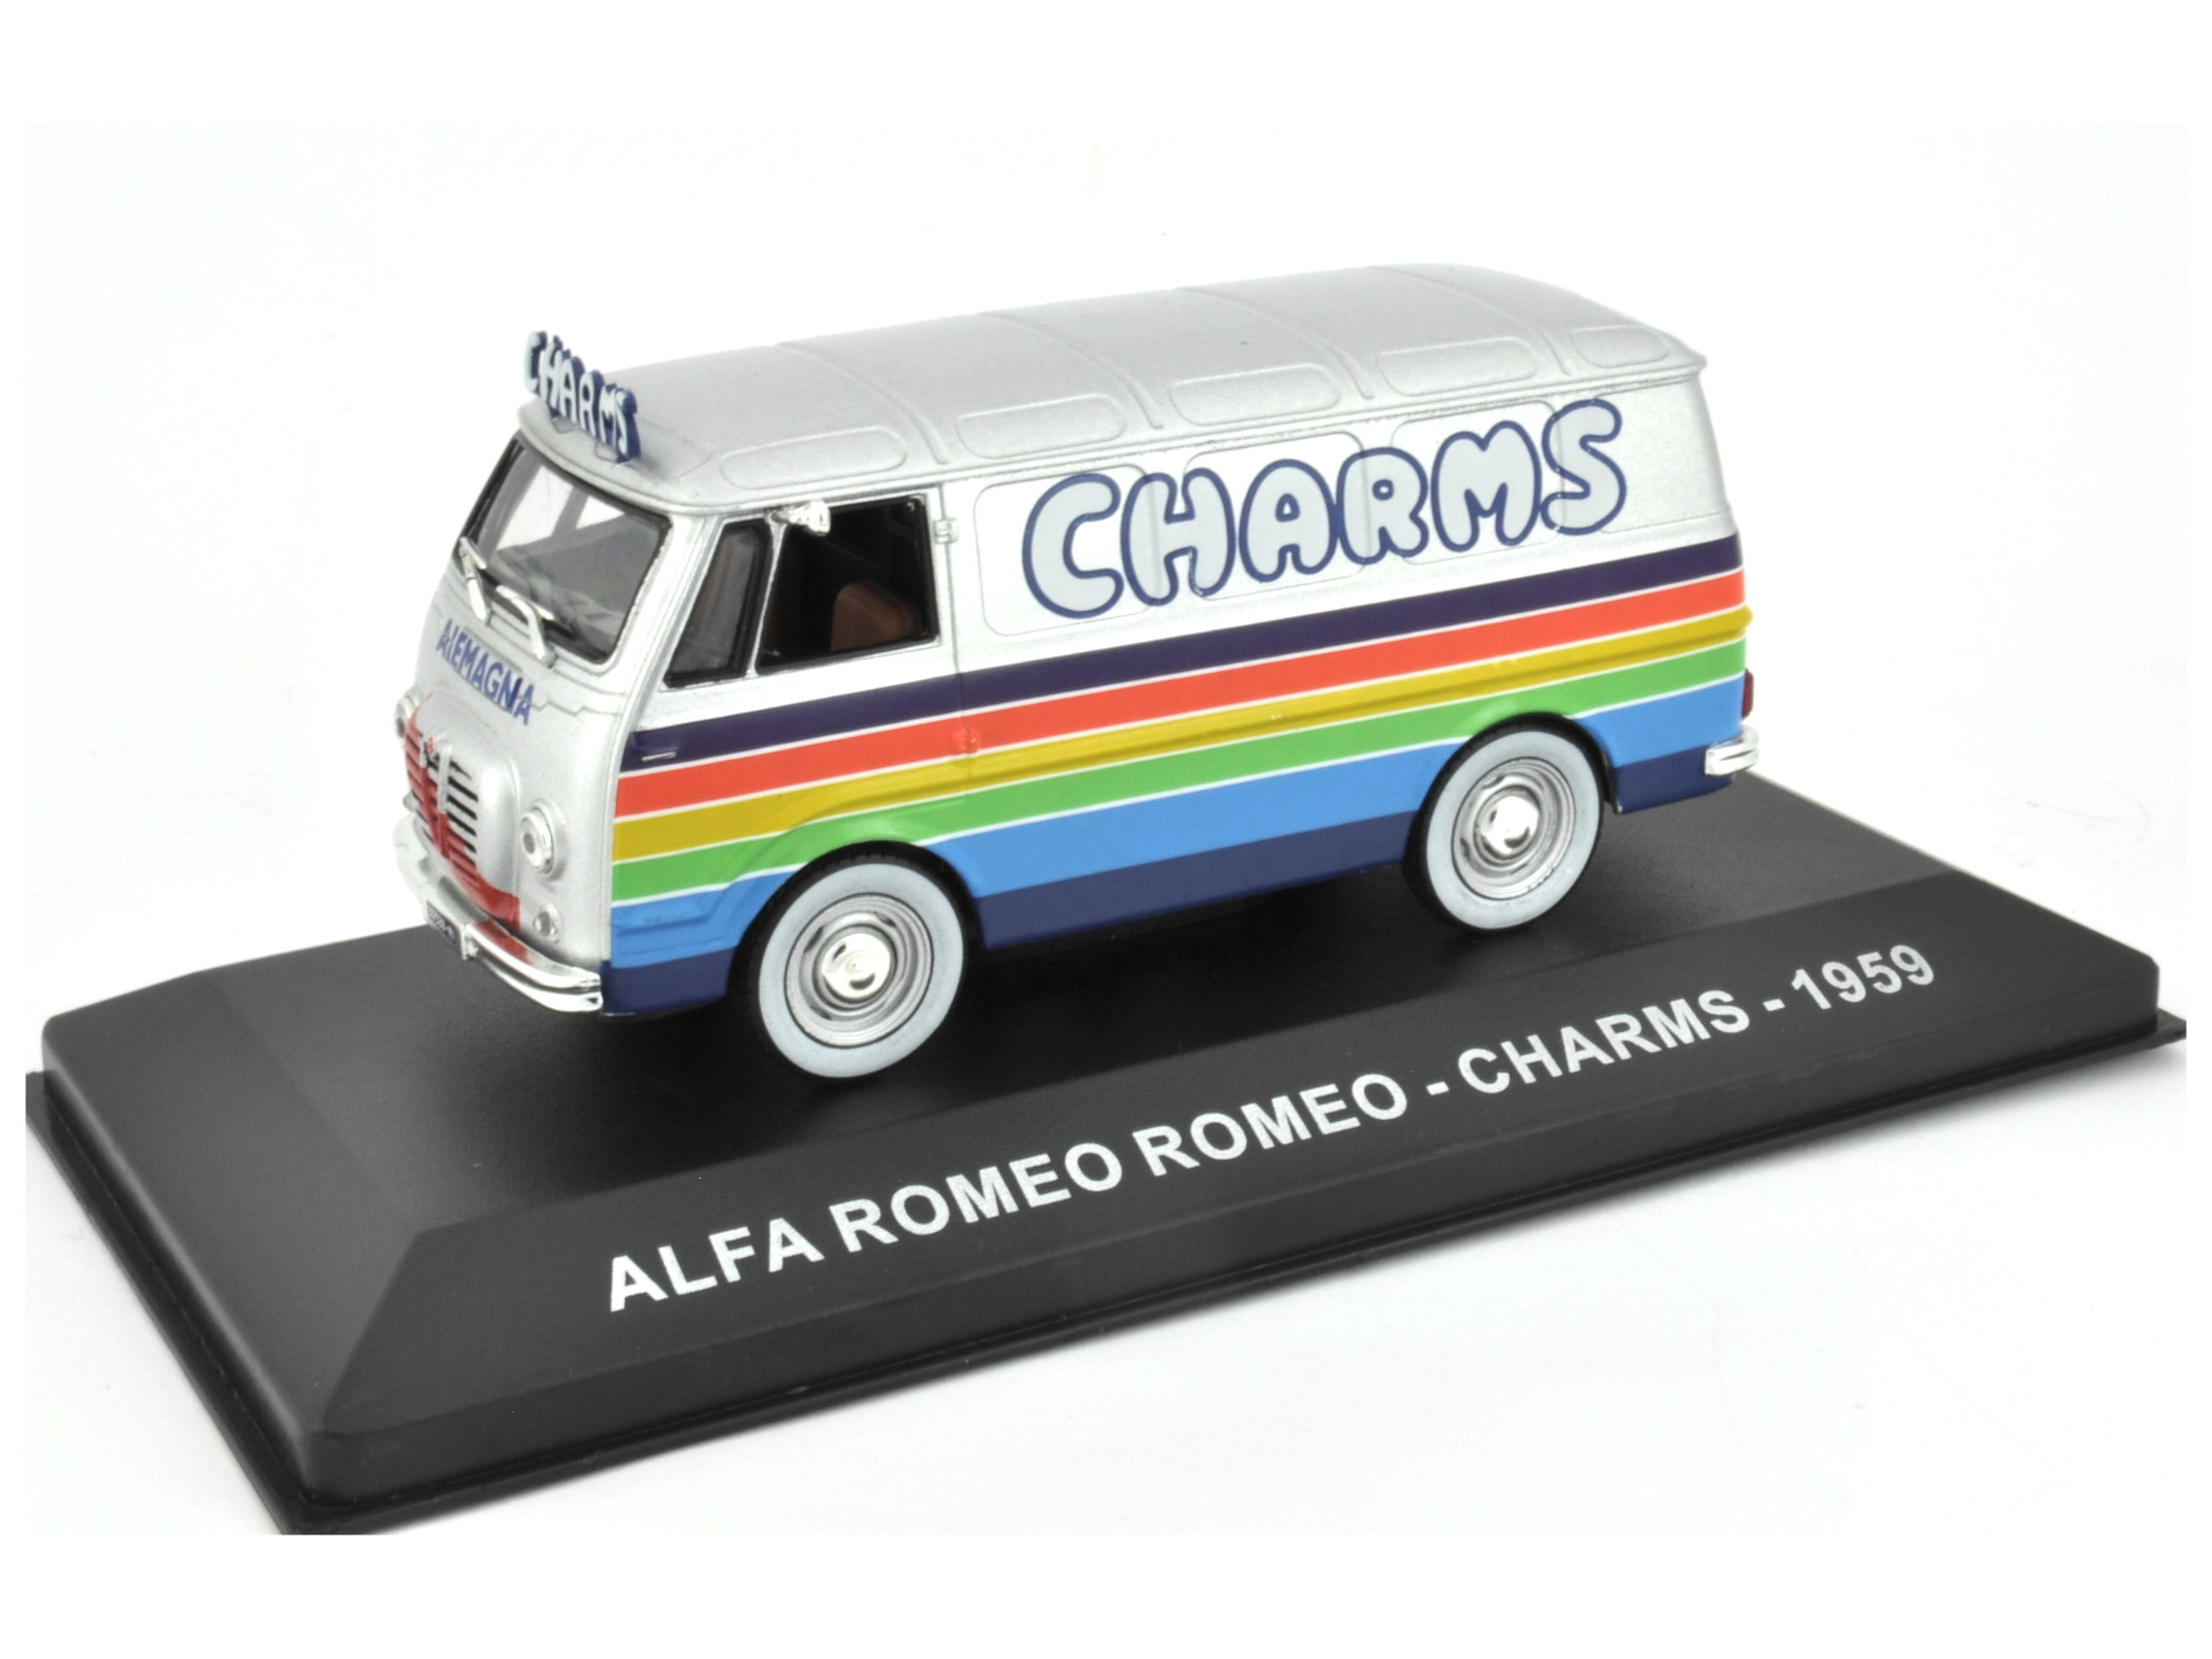 ALFA ROMEO ROMEO - CHARMS - 1959